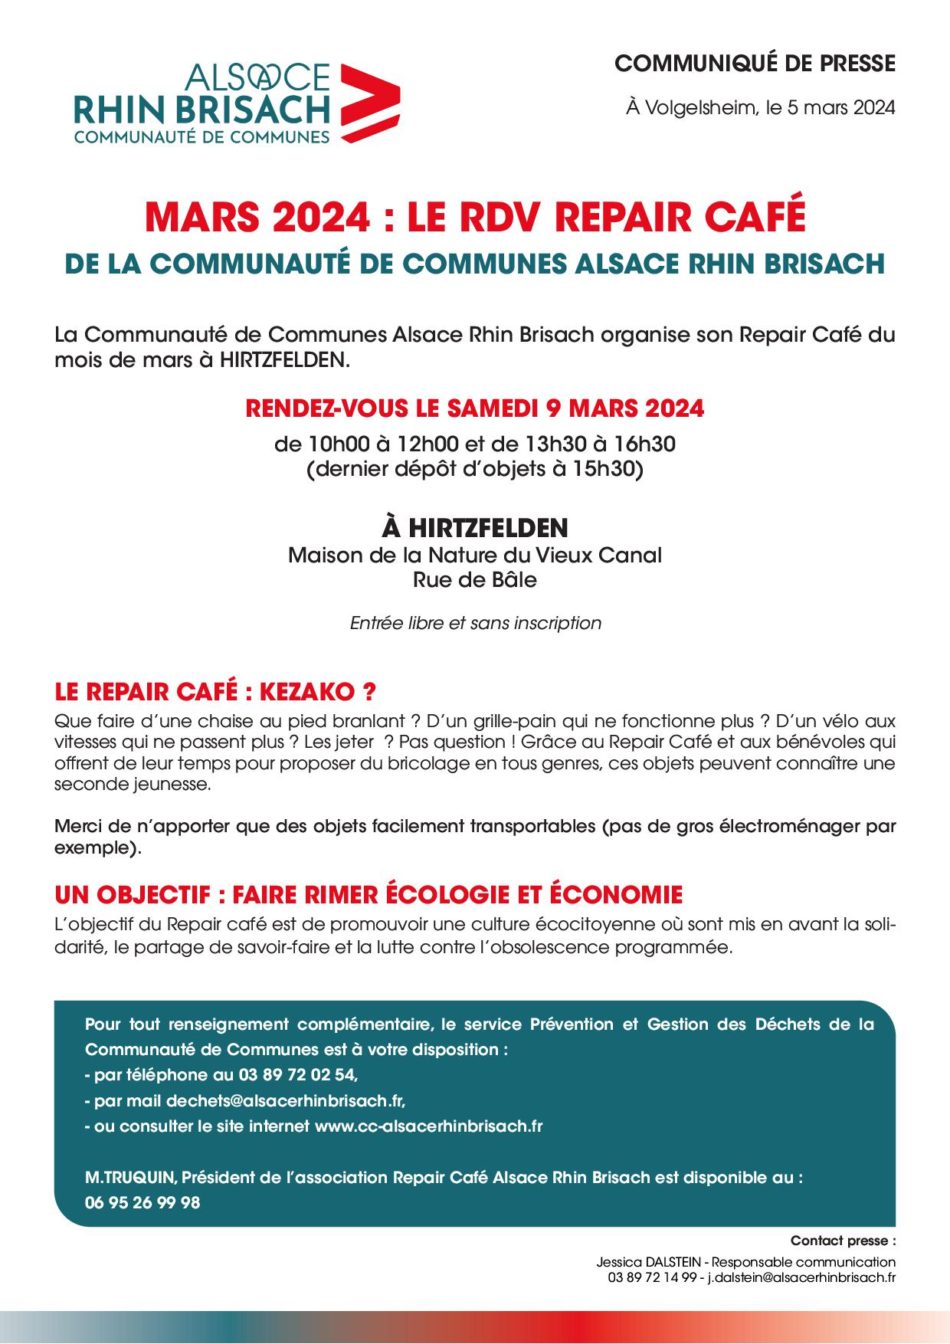 CCARB - Repair Café - 09.03.24